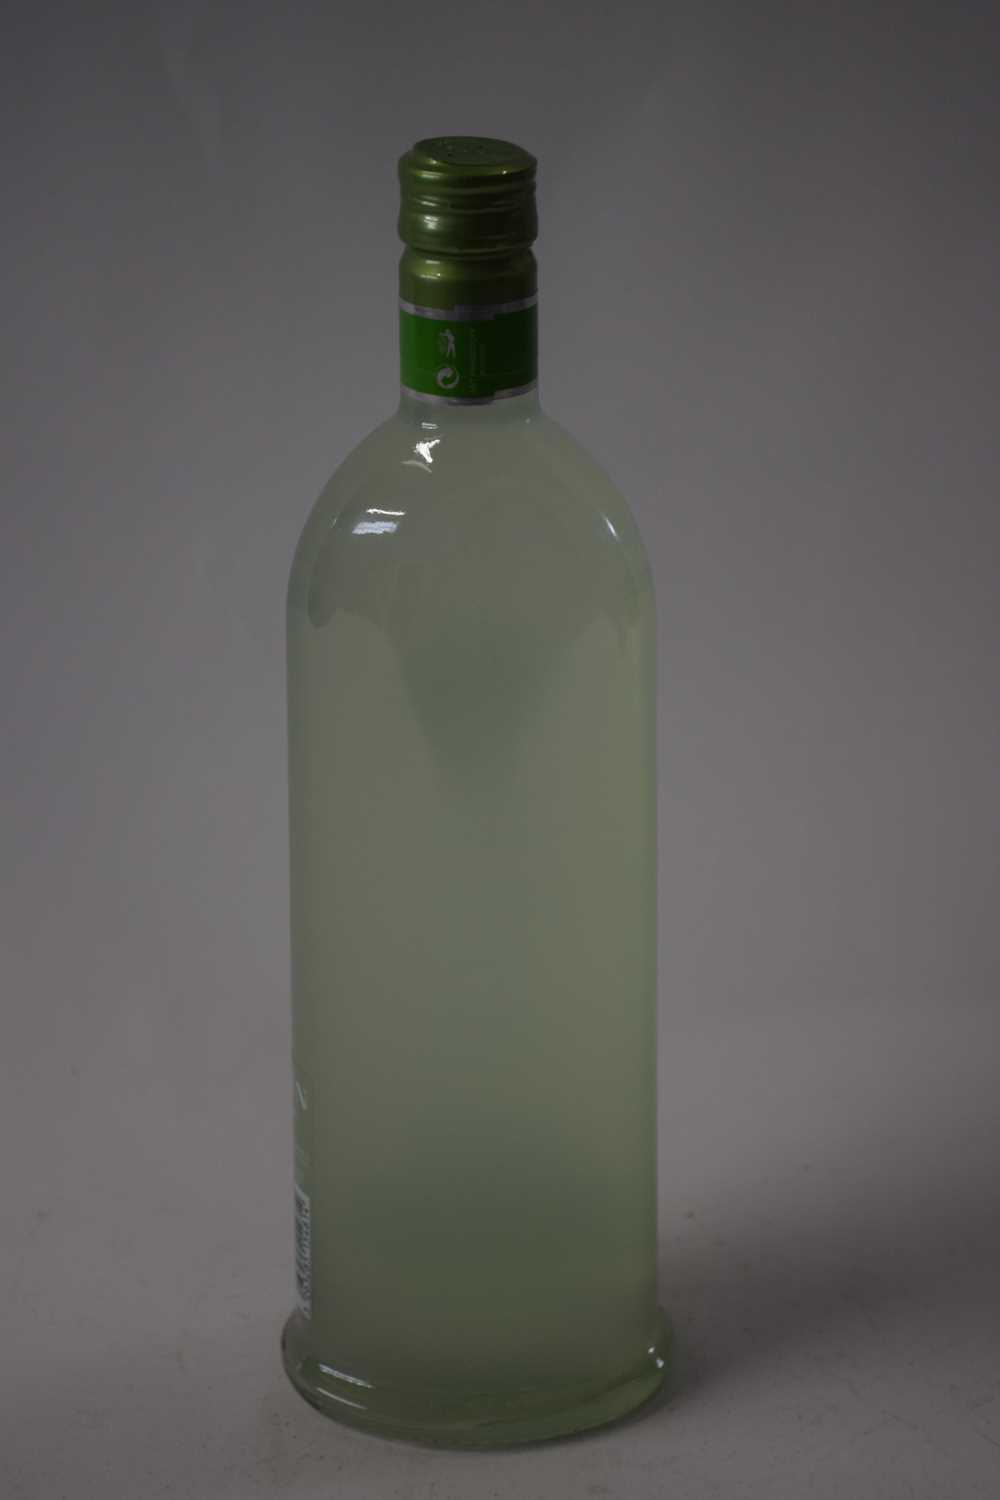 Jelzin Liqueur Apple, 1 bottle - Image 2 of 2